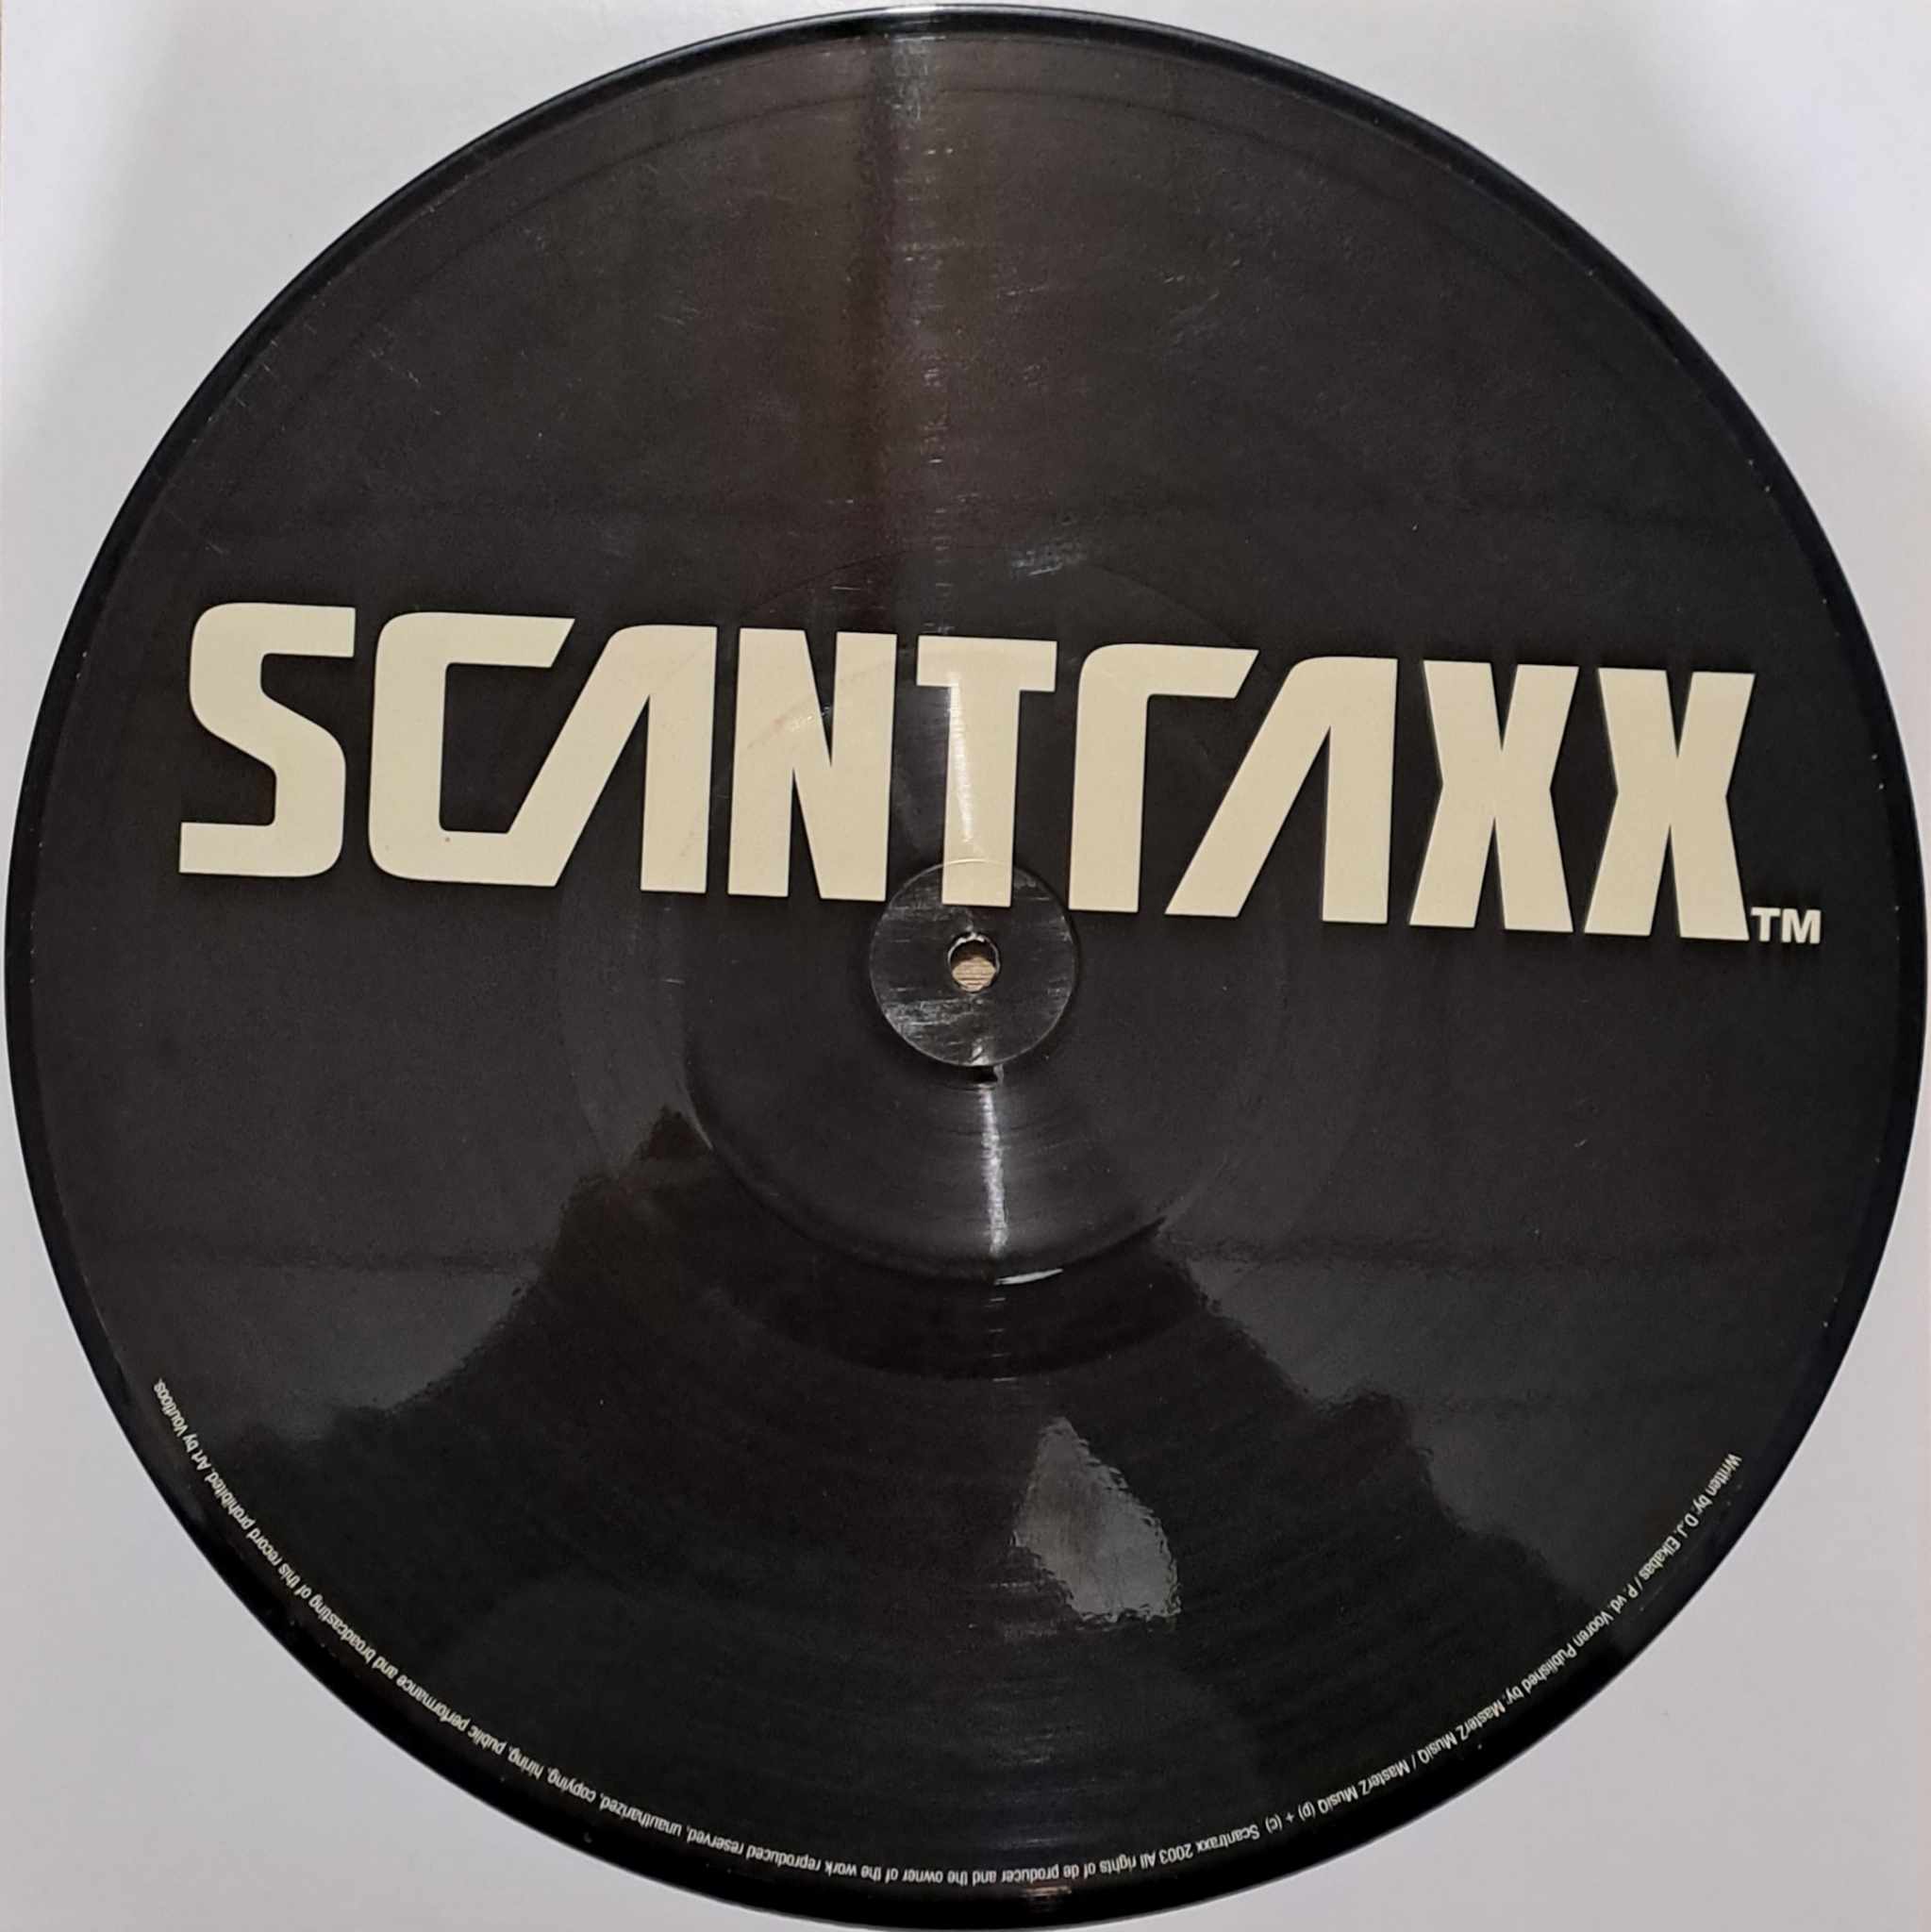 Scantraxx 010 (picture) - vinyle hardstyle